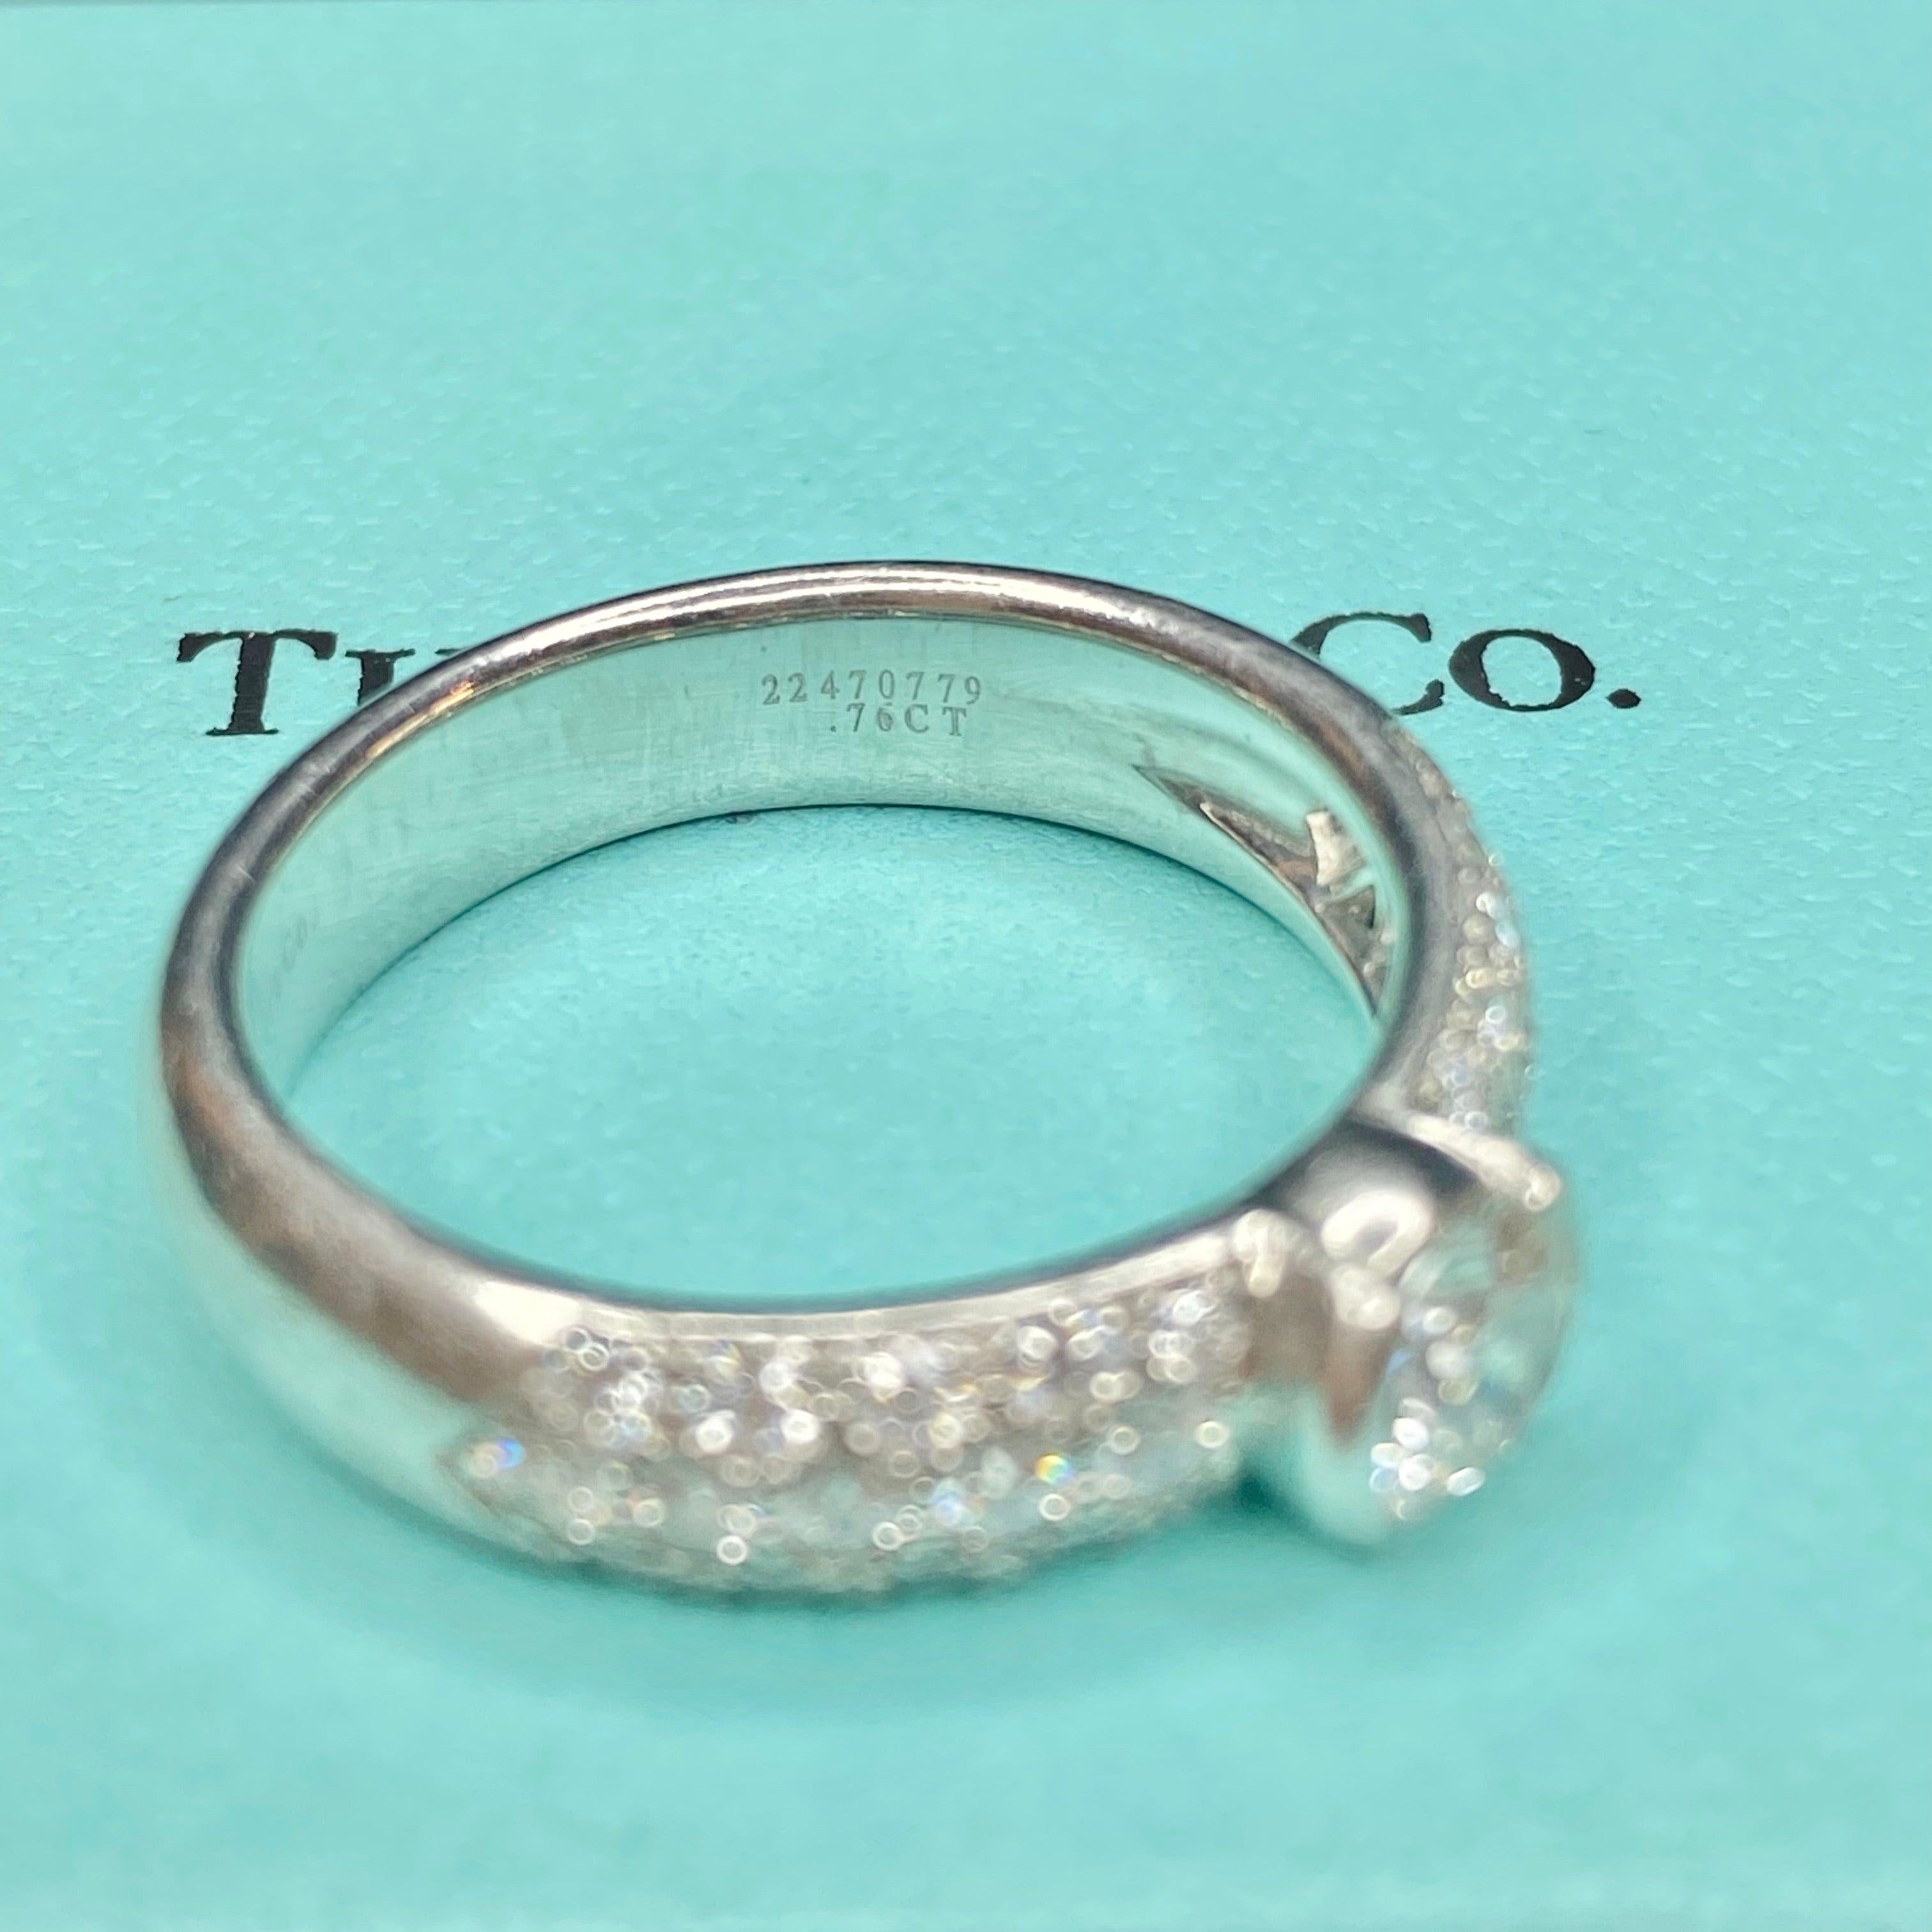 Brilliant Cut Tiffany & Co. Platinum Etoile Diamond Engagement Ring with Original Certificate